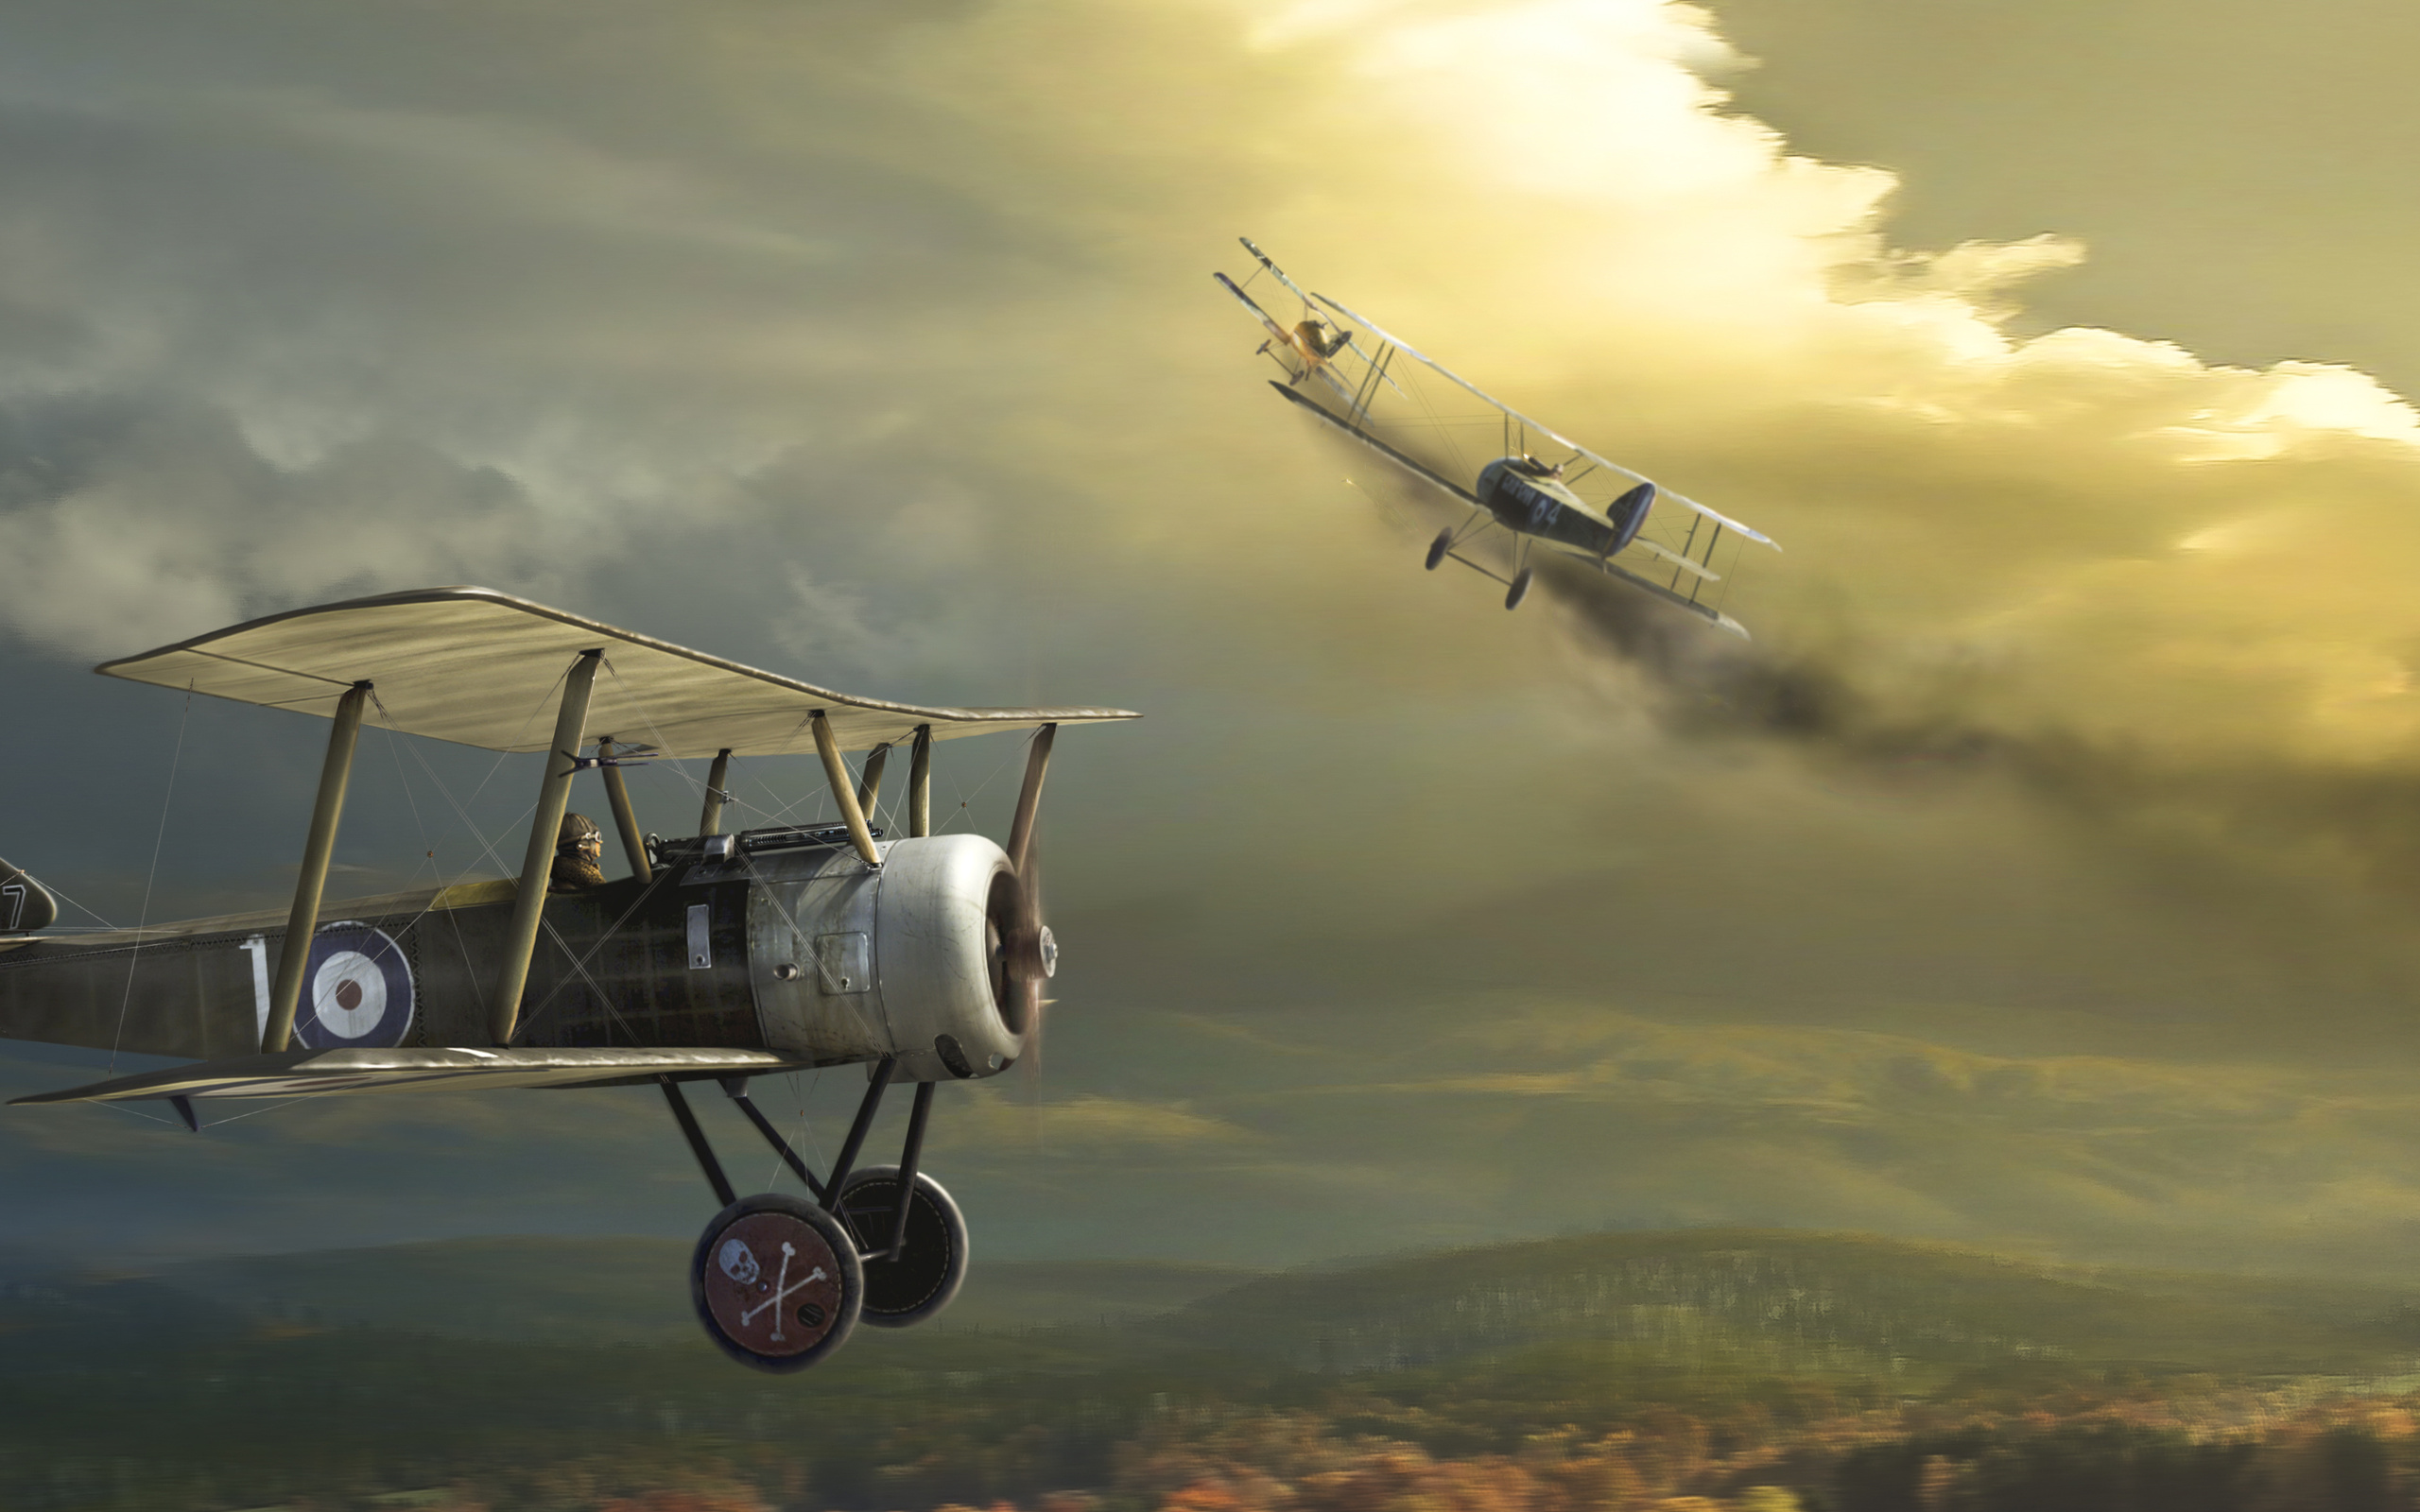 Biplane sky plane military wallpaper 2560x1600 166854